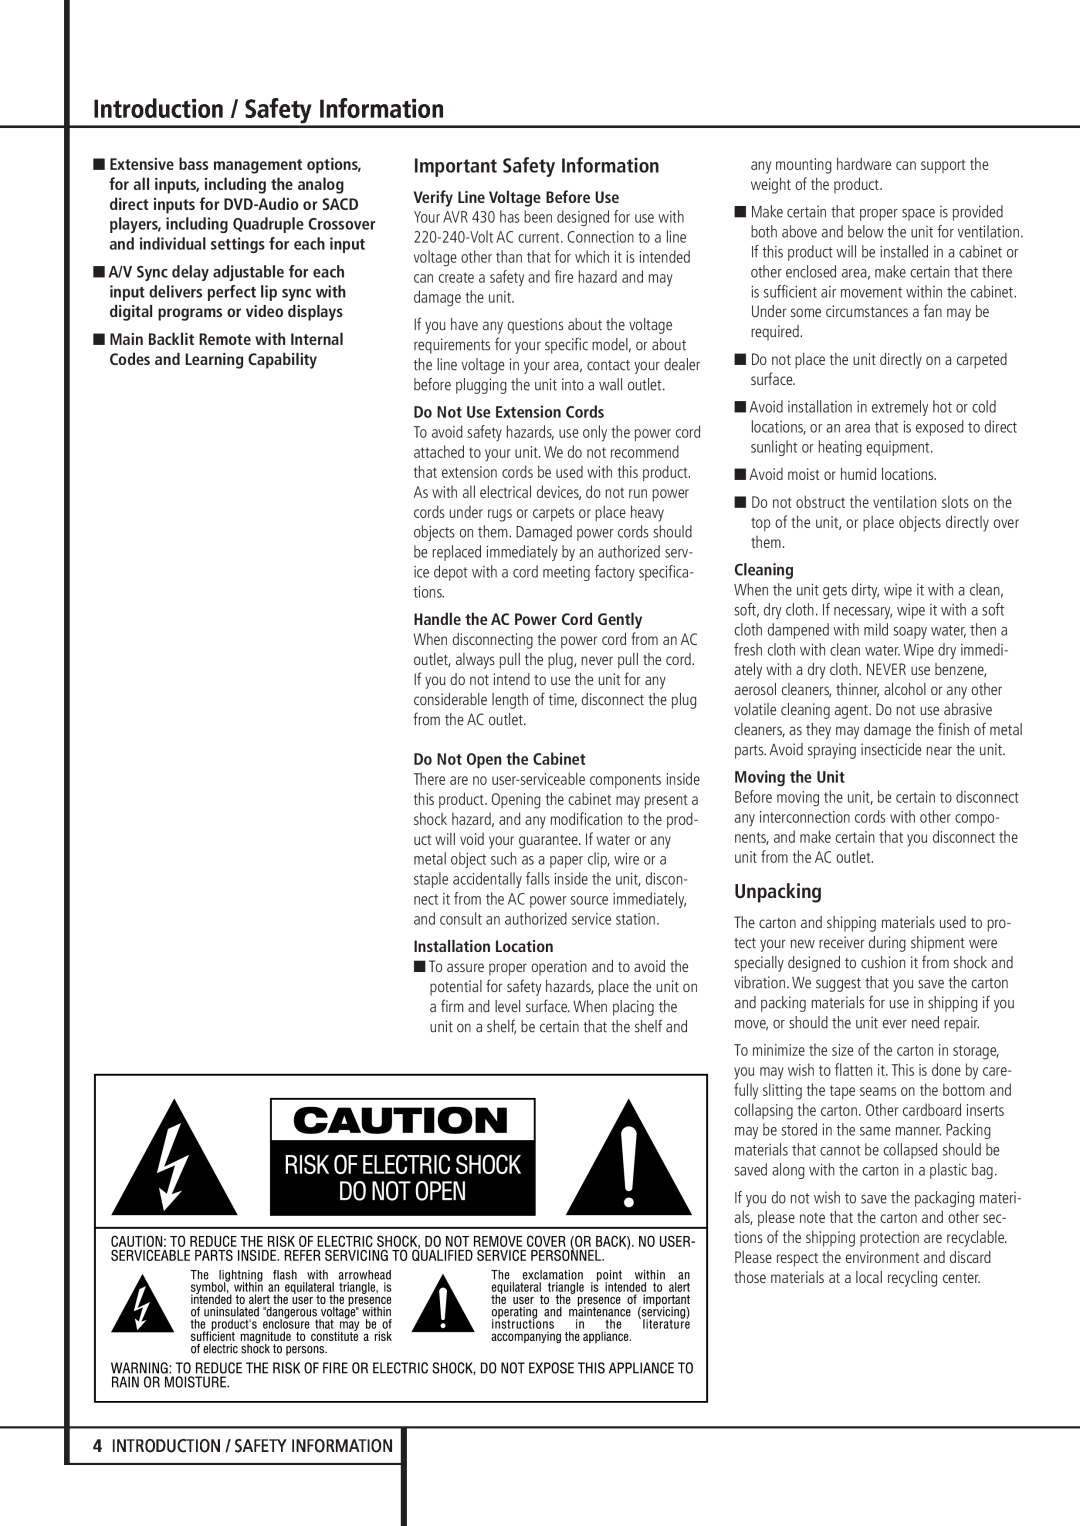 Harman-Kardon AVR 430 Introduction / Safety Information, Important Safety Information, Unpacking, Do Not Open the Cabinet 